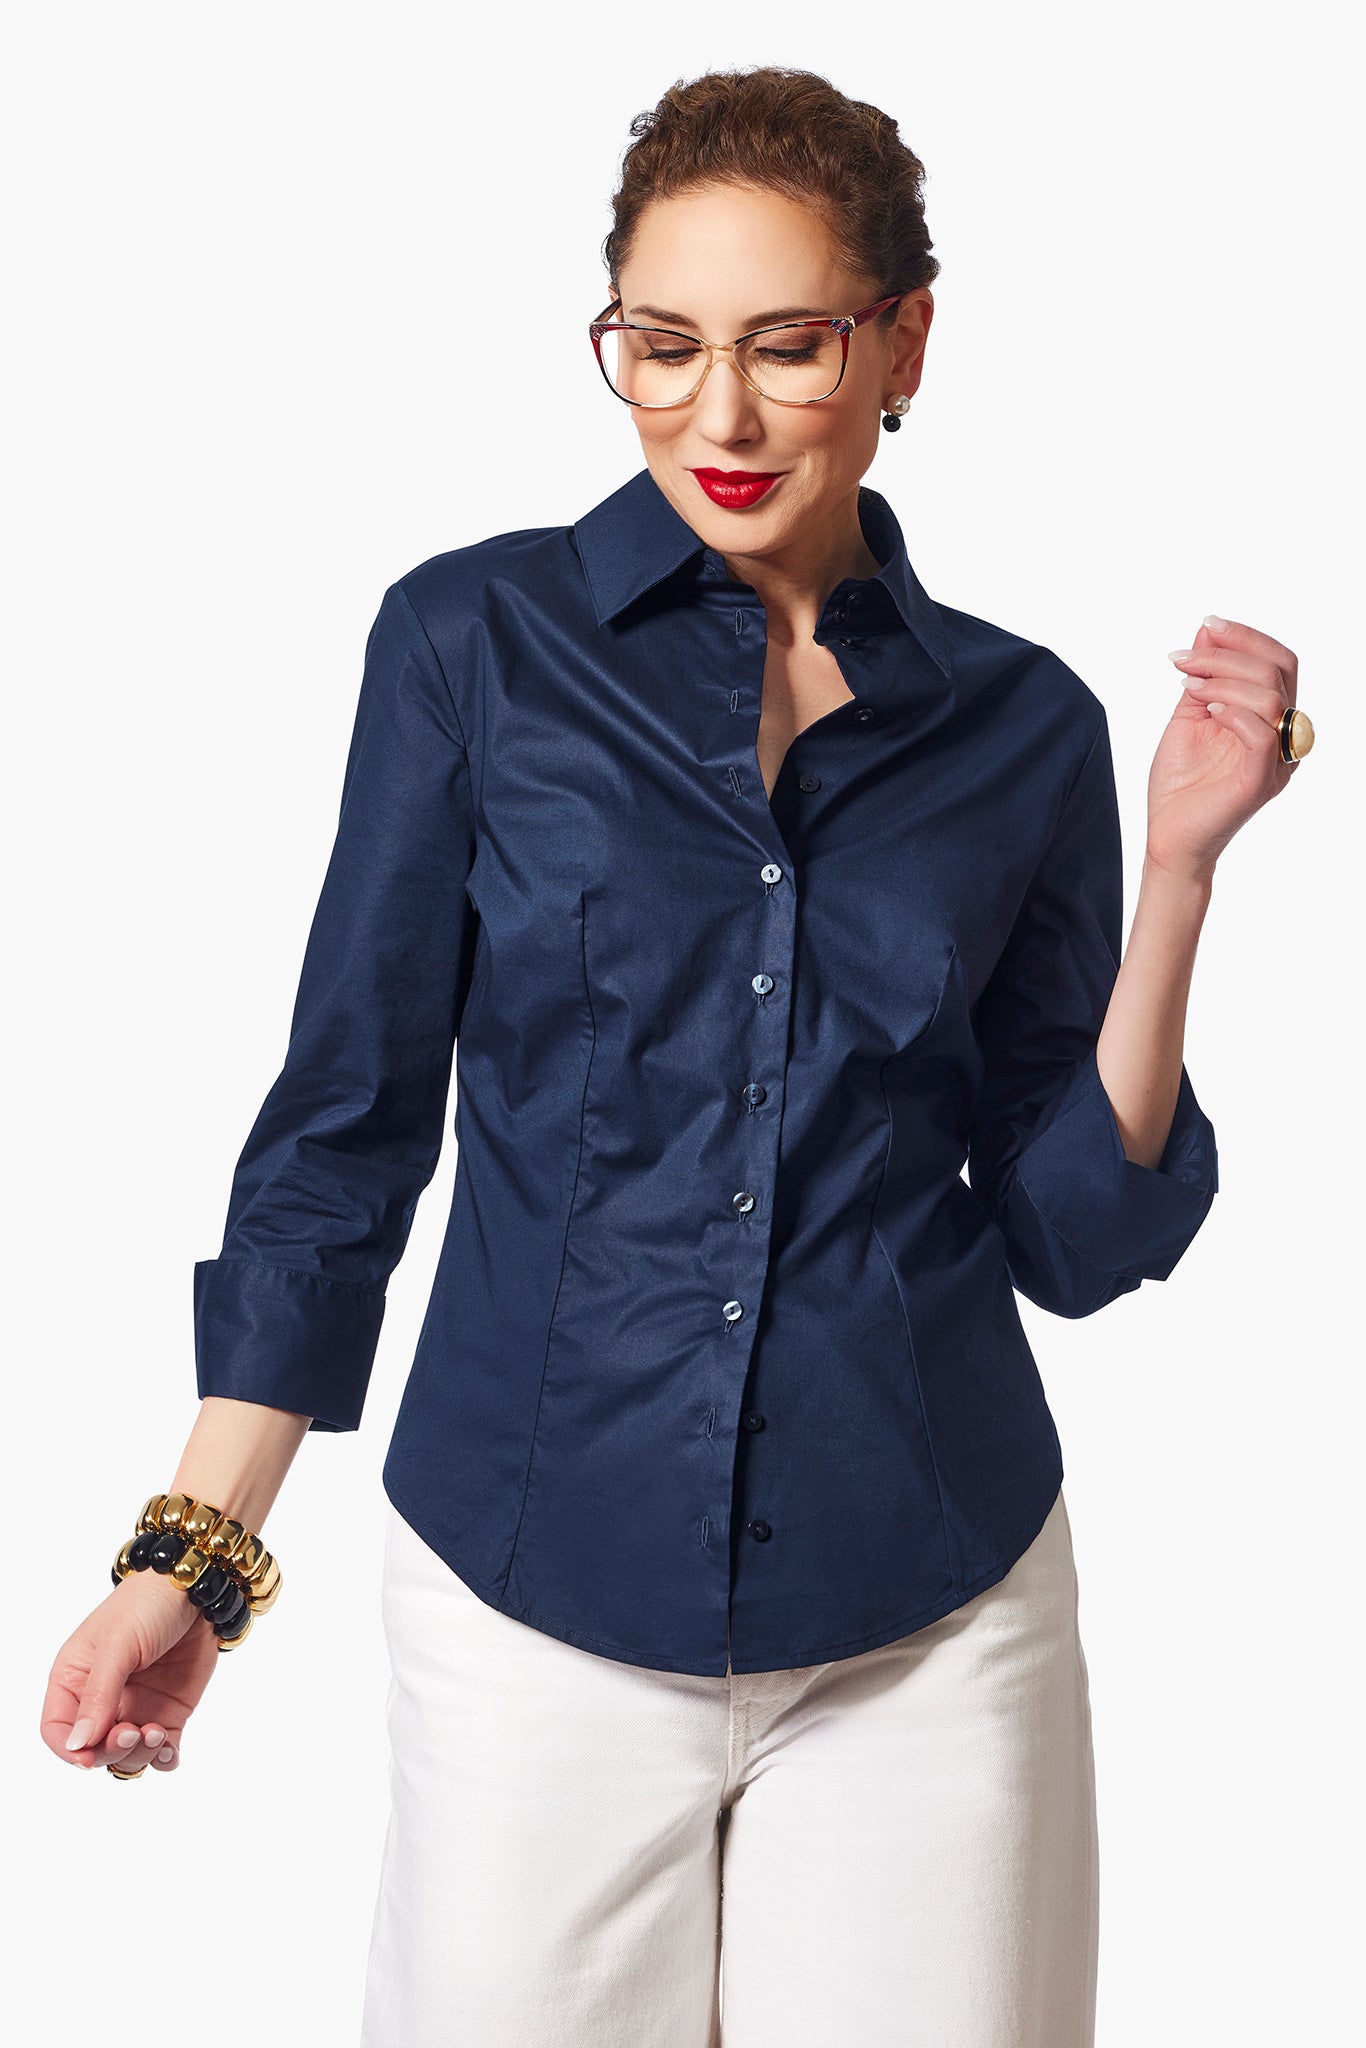 The Day-to-Day Applique Shirt - Vermillion | Carla Rockmore